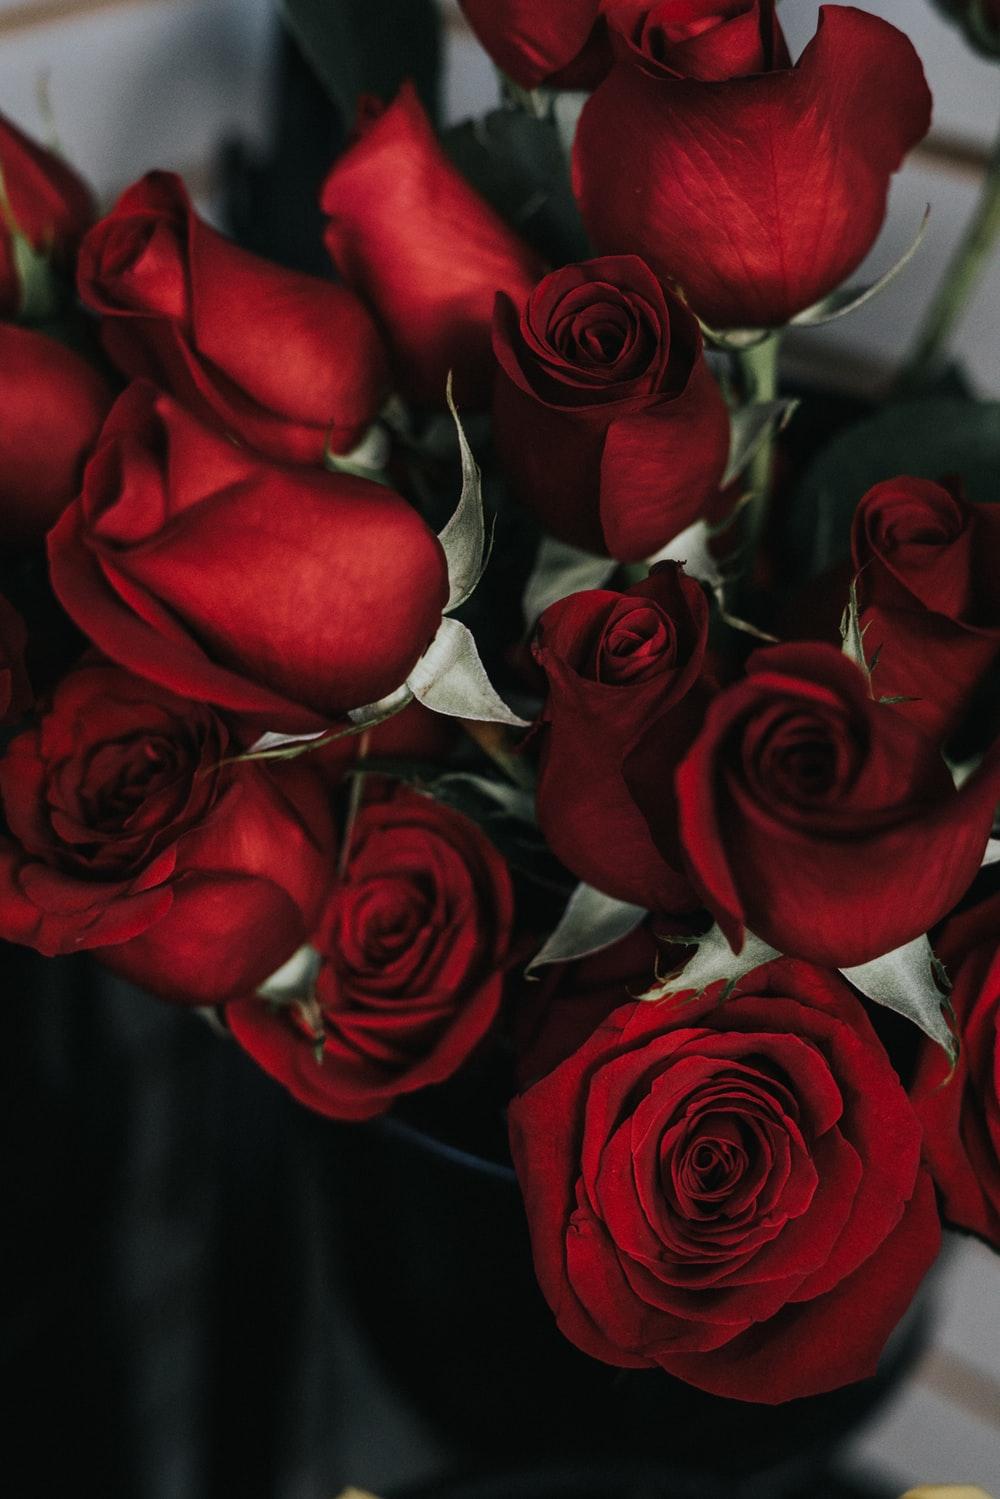 Roses Image. Download Free Image